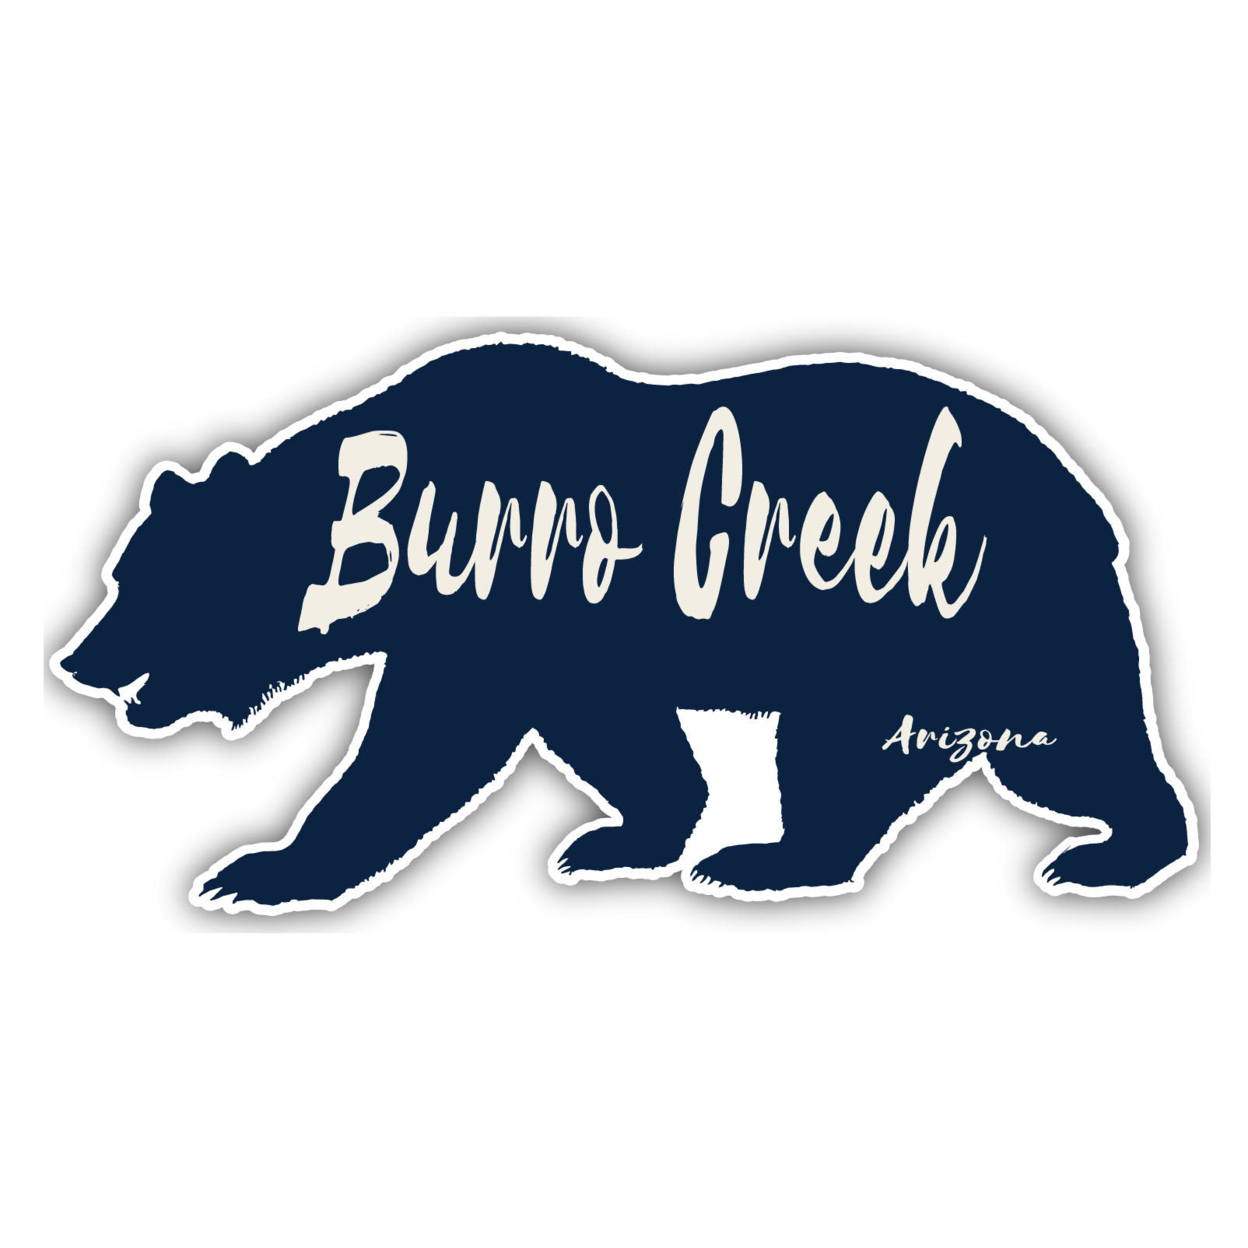 Burro Creek Arizona Souvenir Decorative Stickers (Choose Theme And Size) - 4-Pack, 12-Inch, Bear